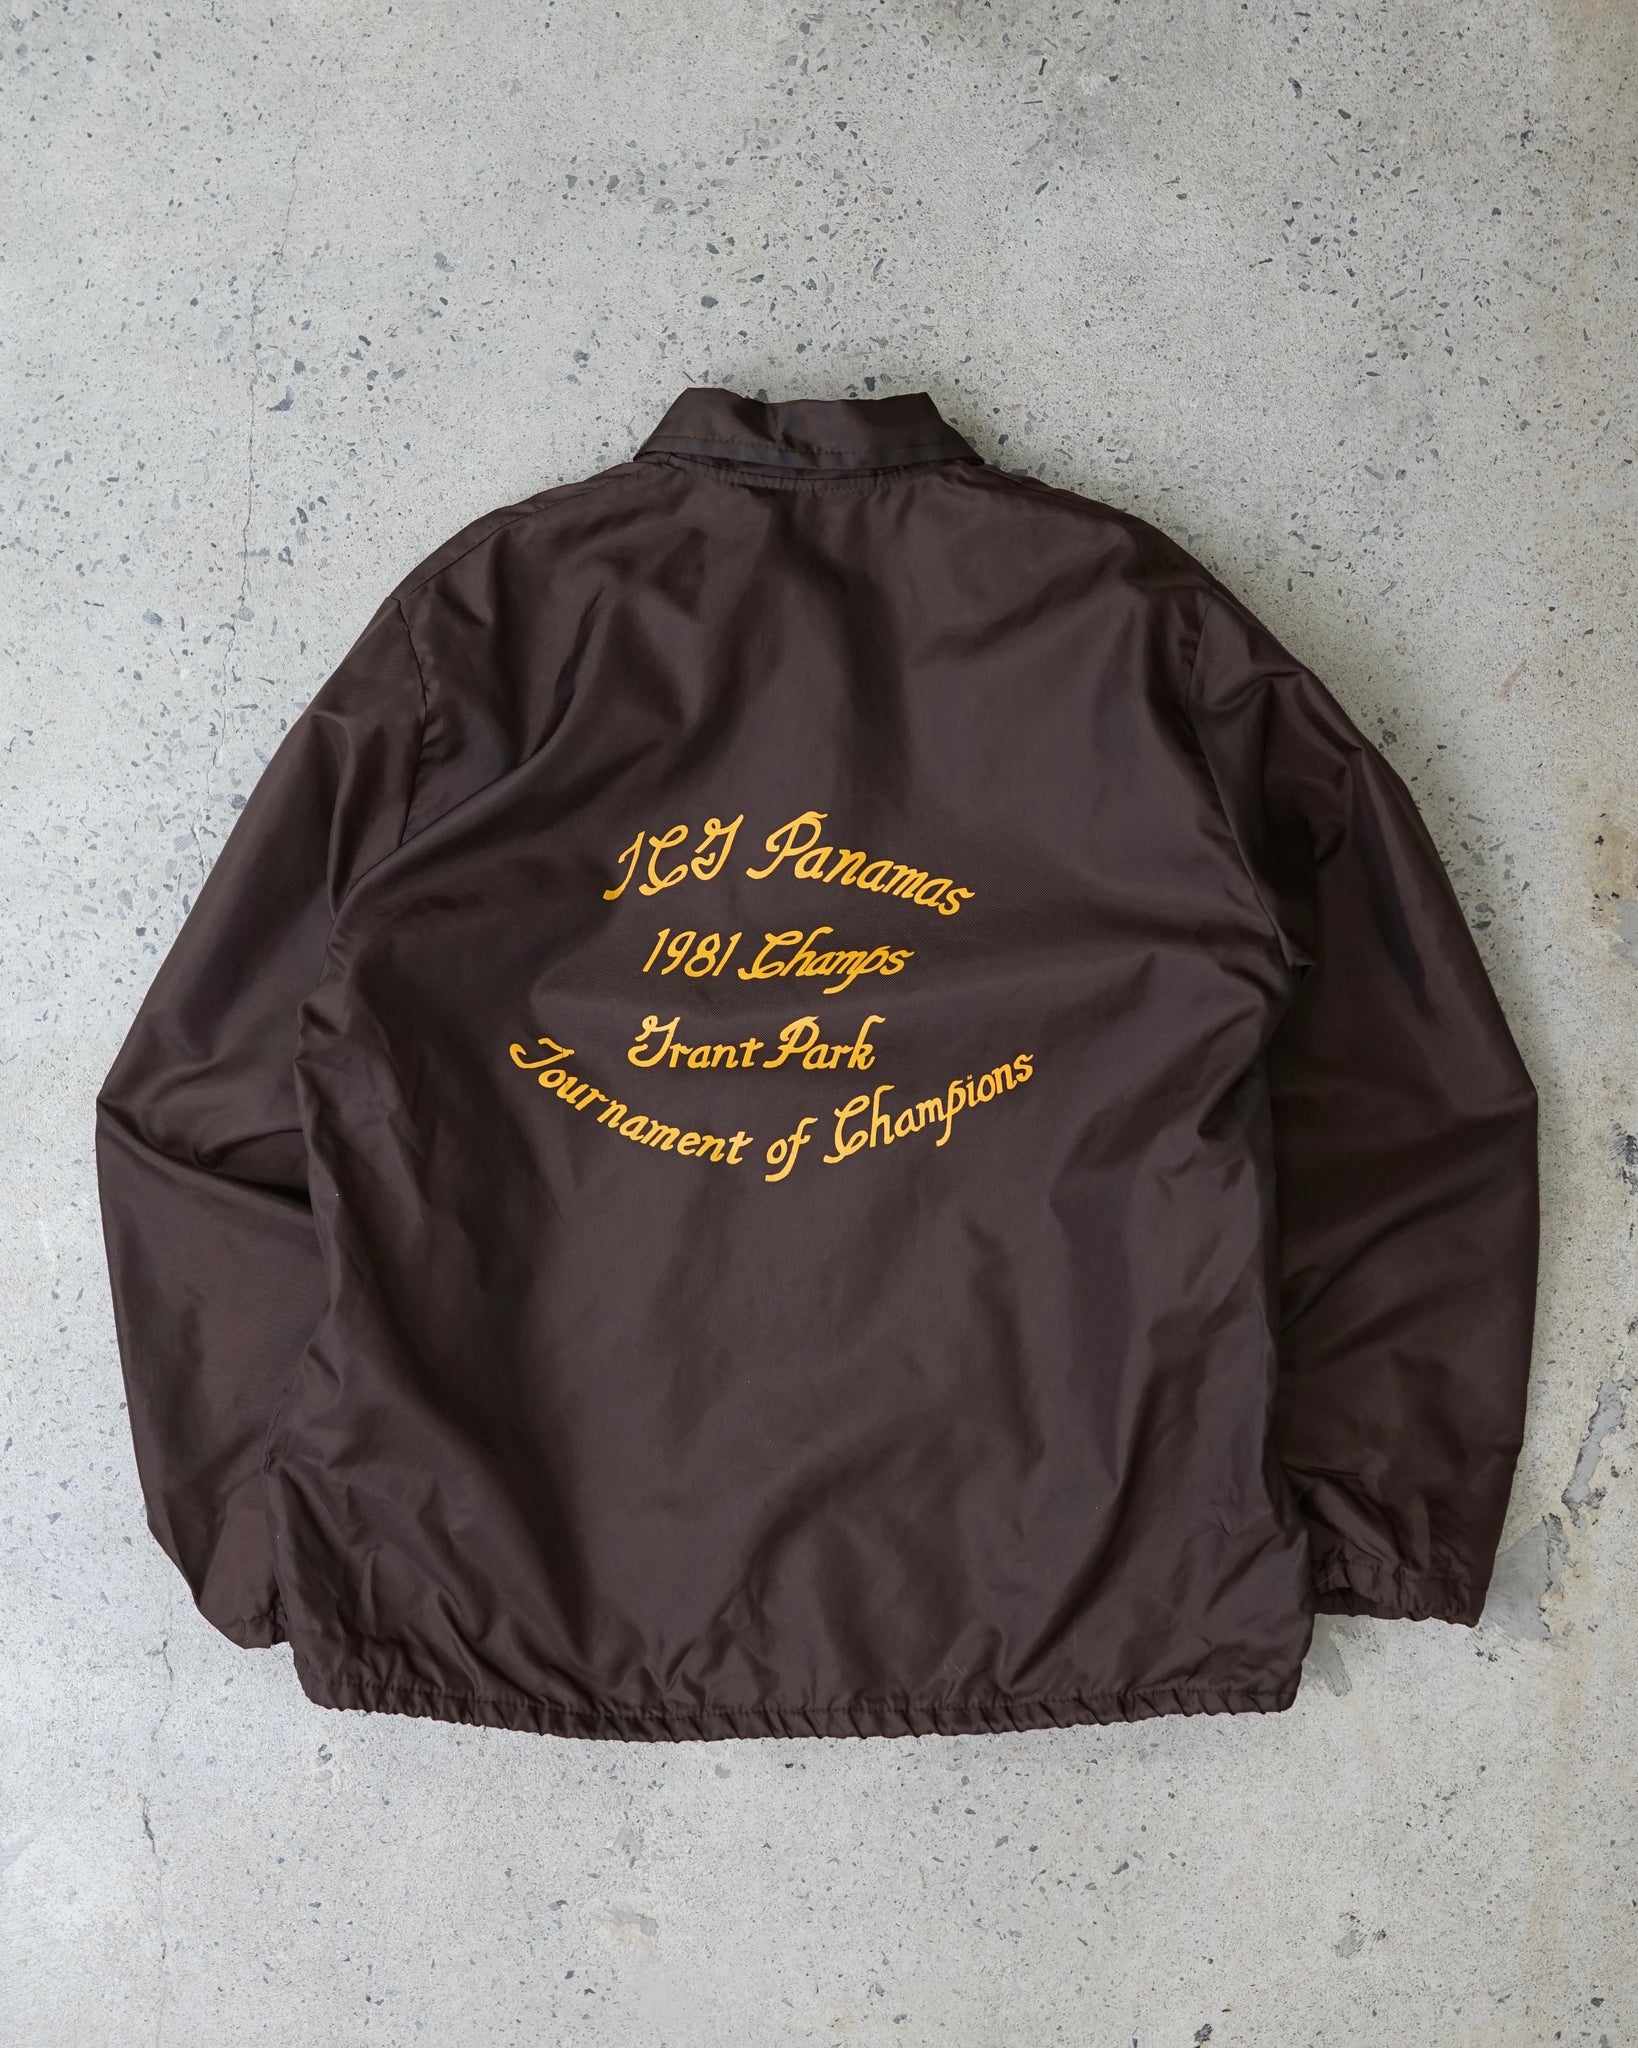 panamas 1981 champs jacket - medium